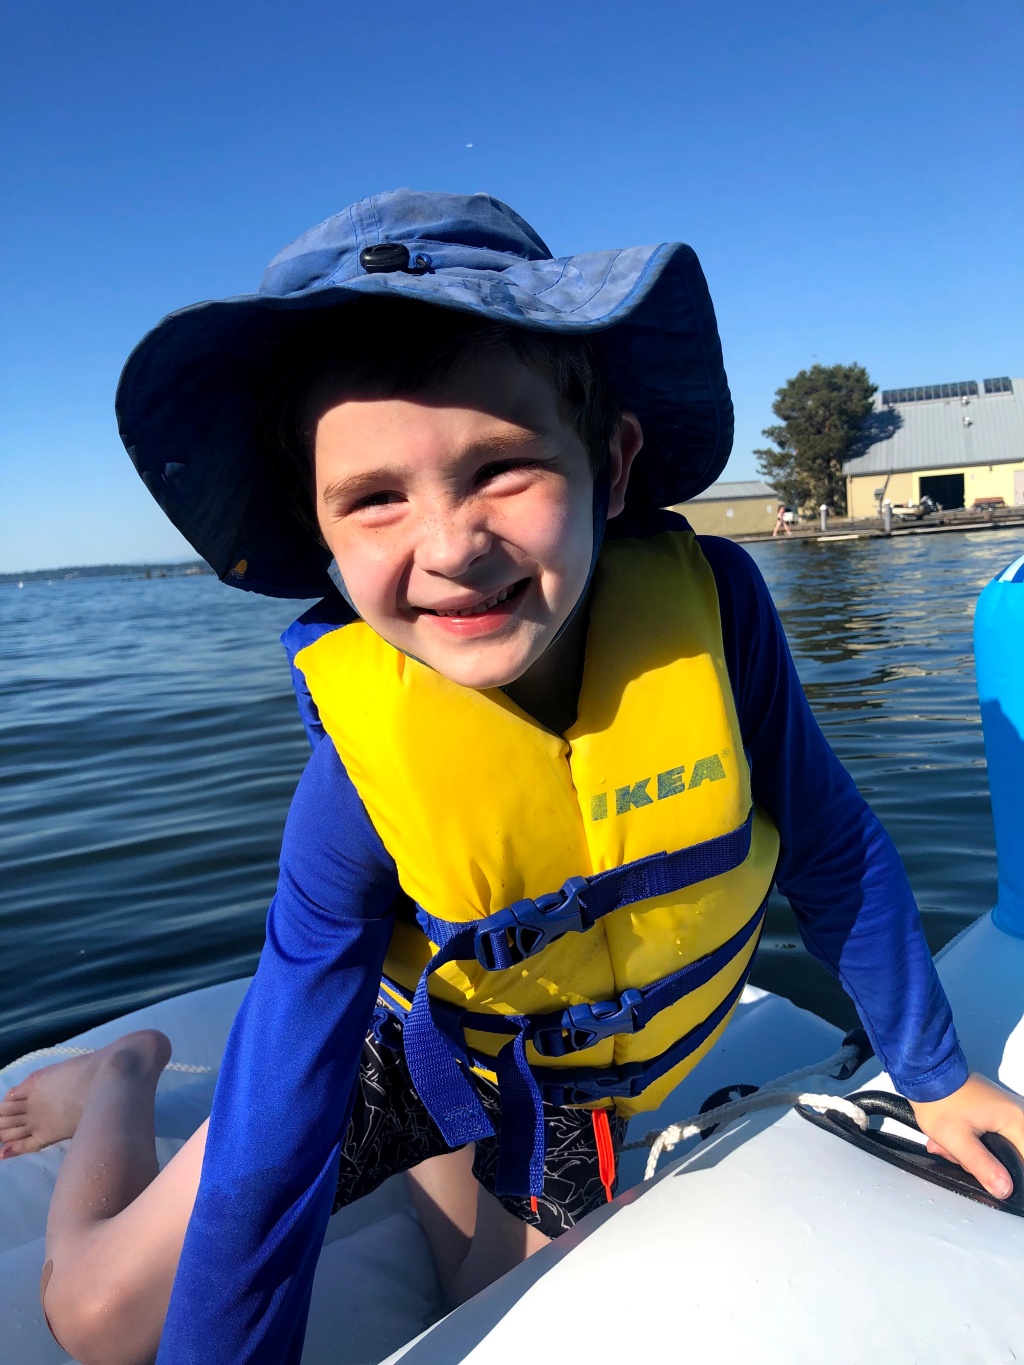 Child on boat raft float on lake wearing bright yellow Ikea life jacket and blue sun hat